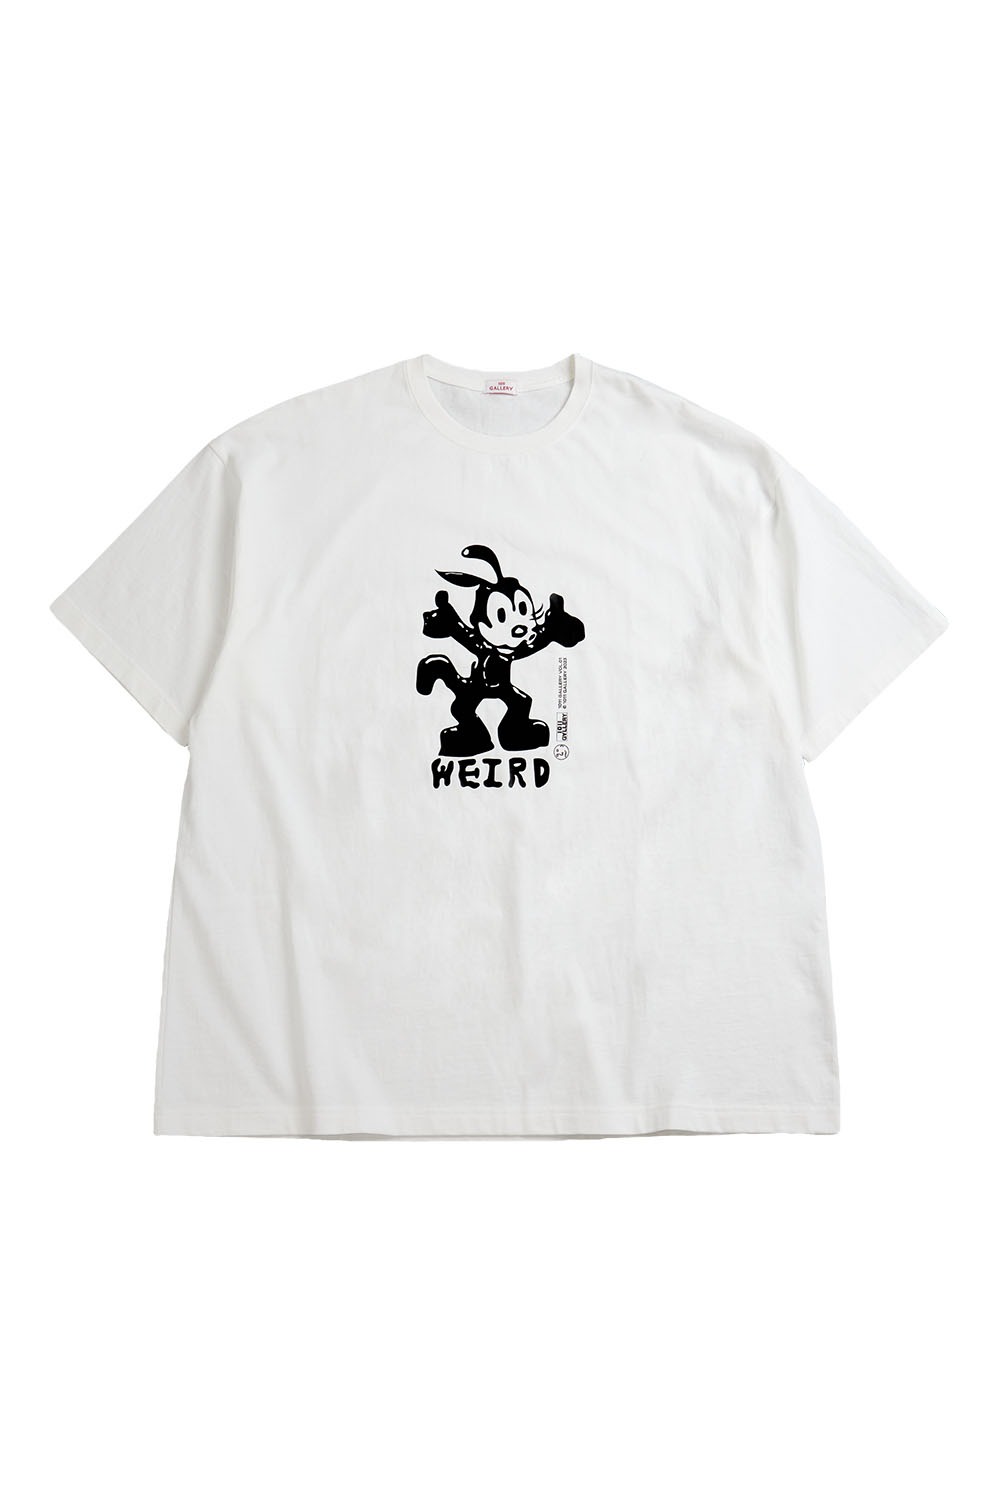 Gallery Overfit Rabbit T-shirt - White